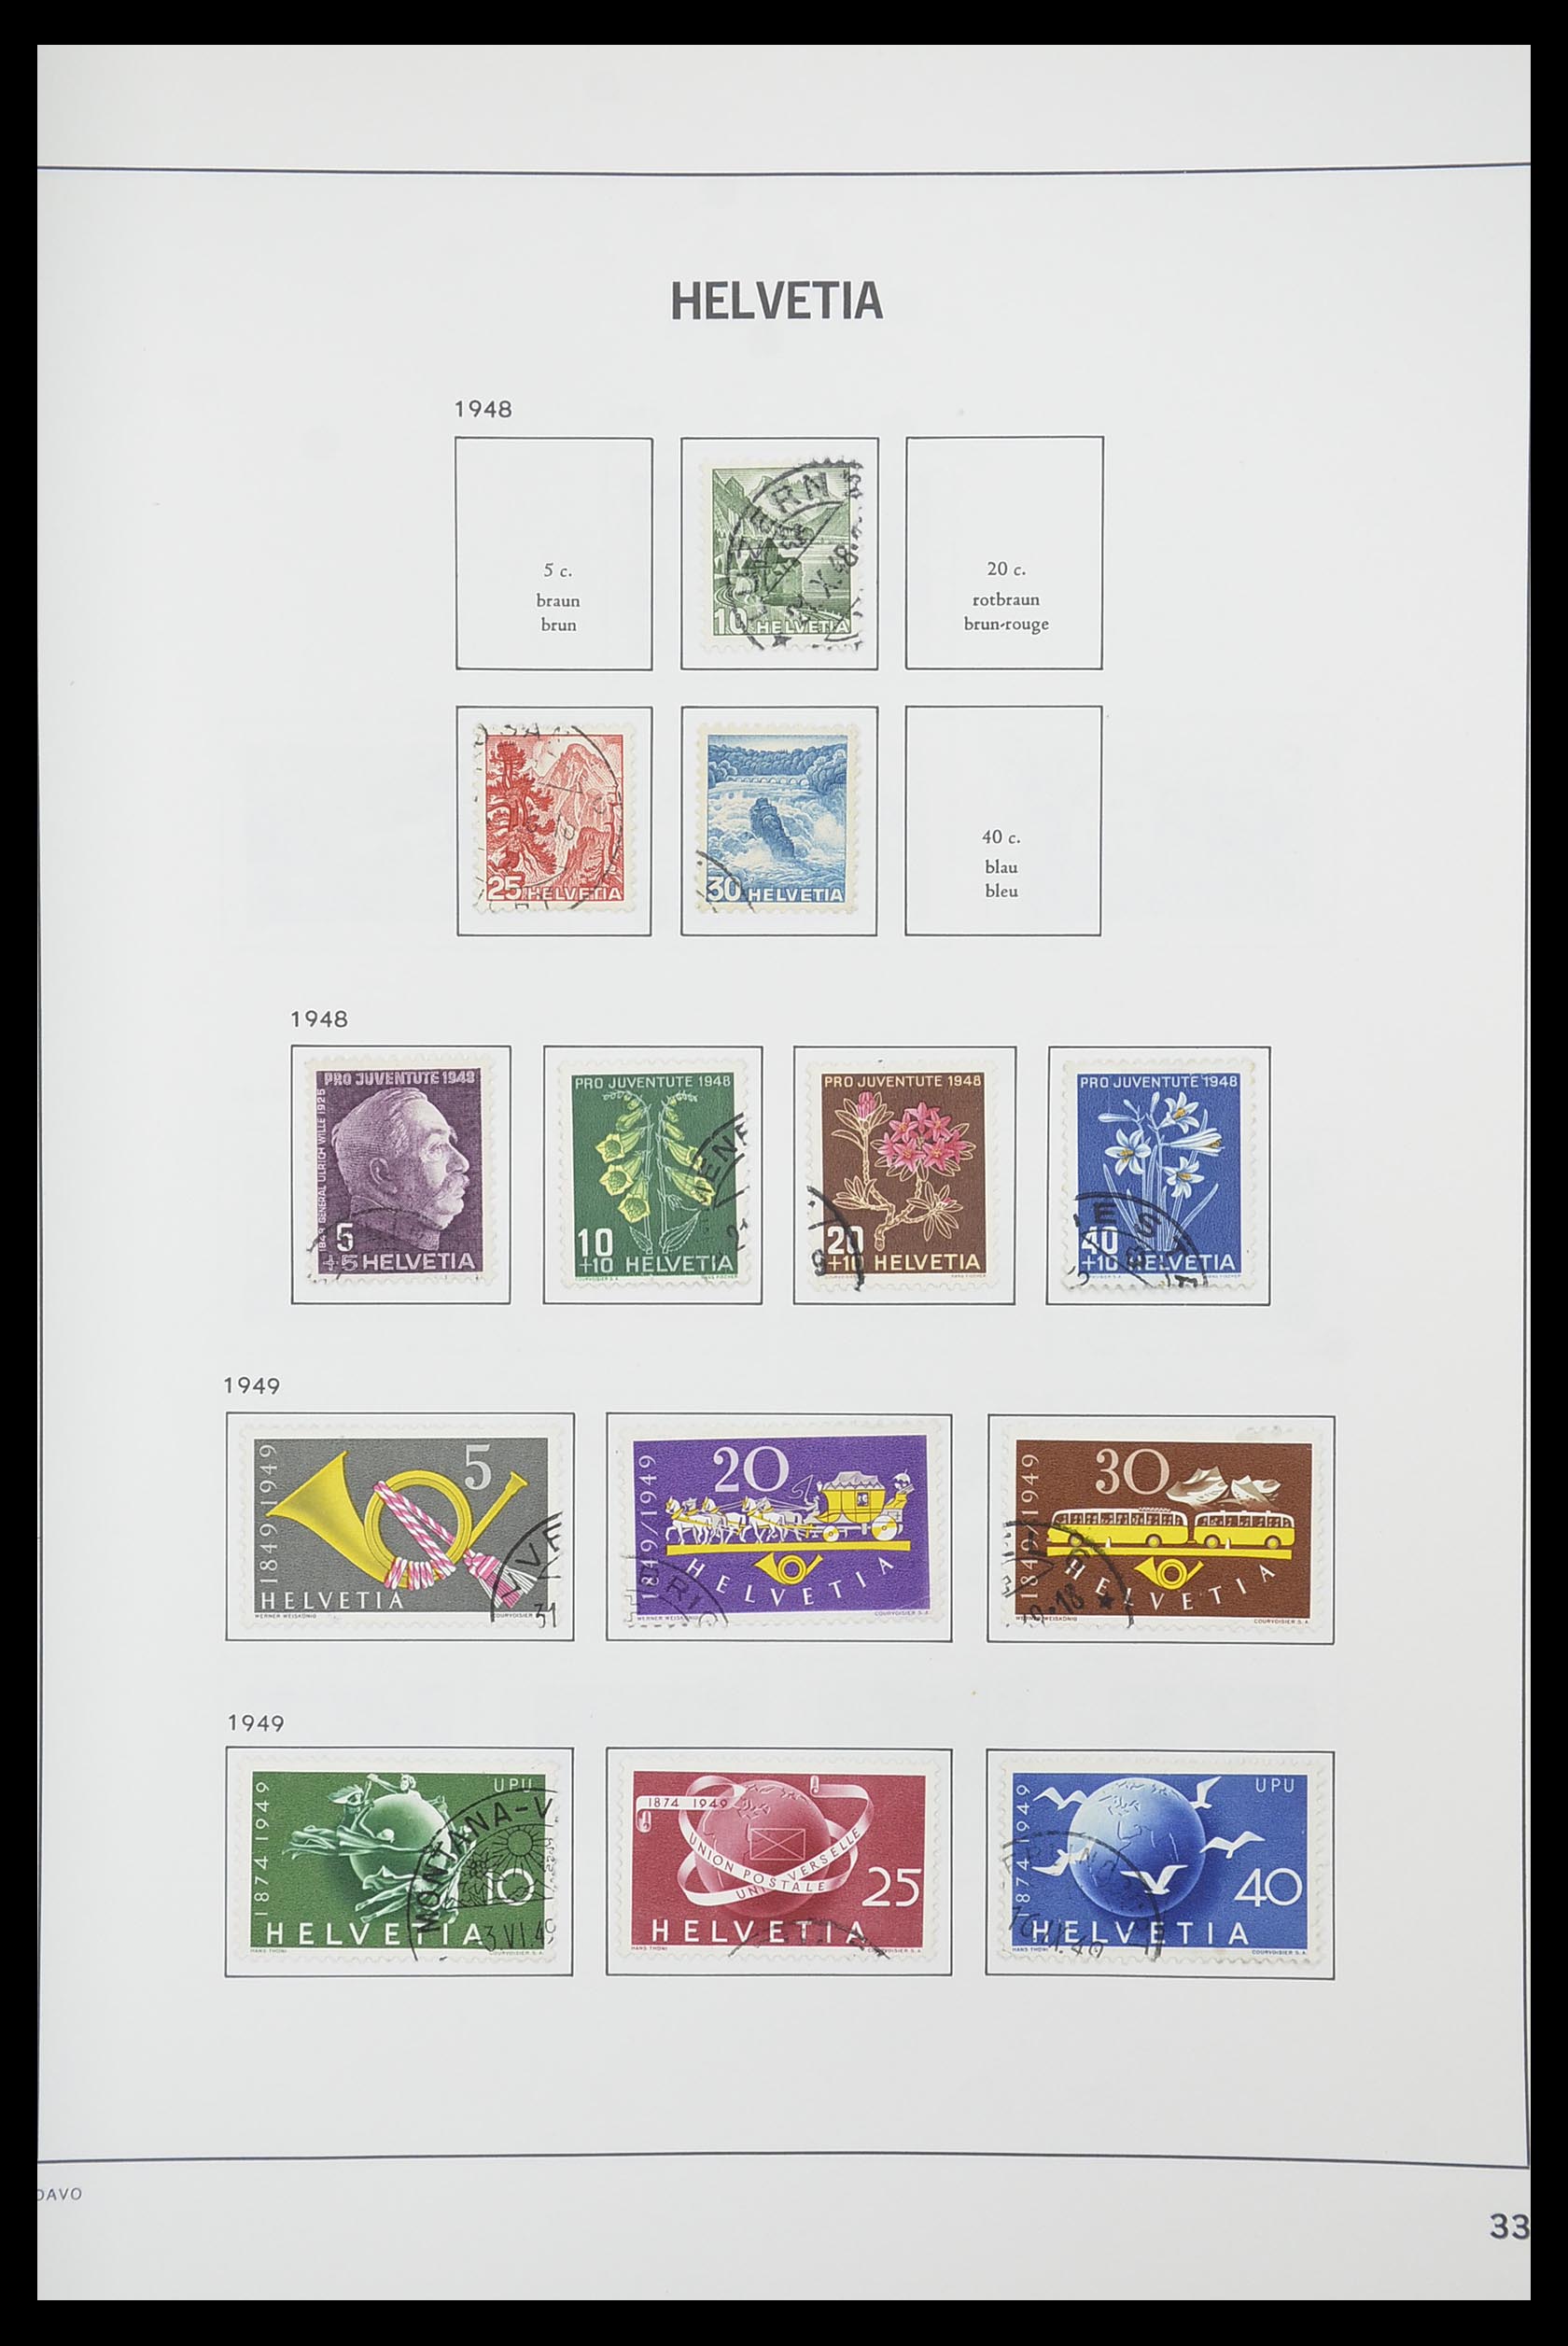 33925 031 - Stamp collection 33925 Switzerland 1854-1991.